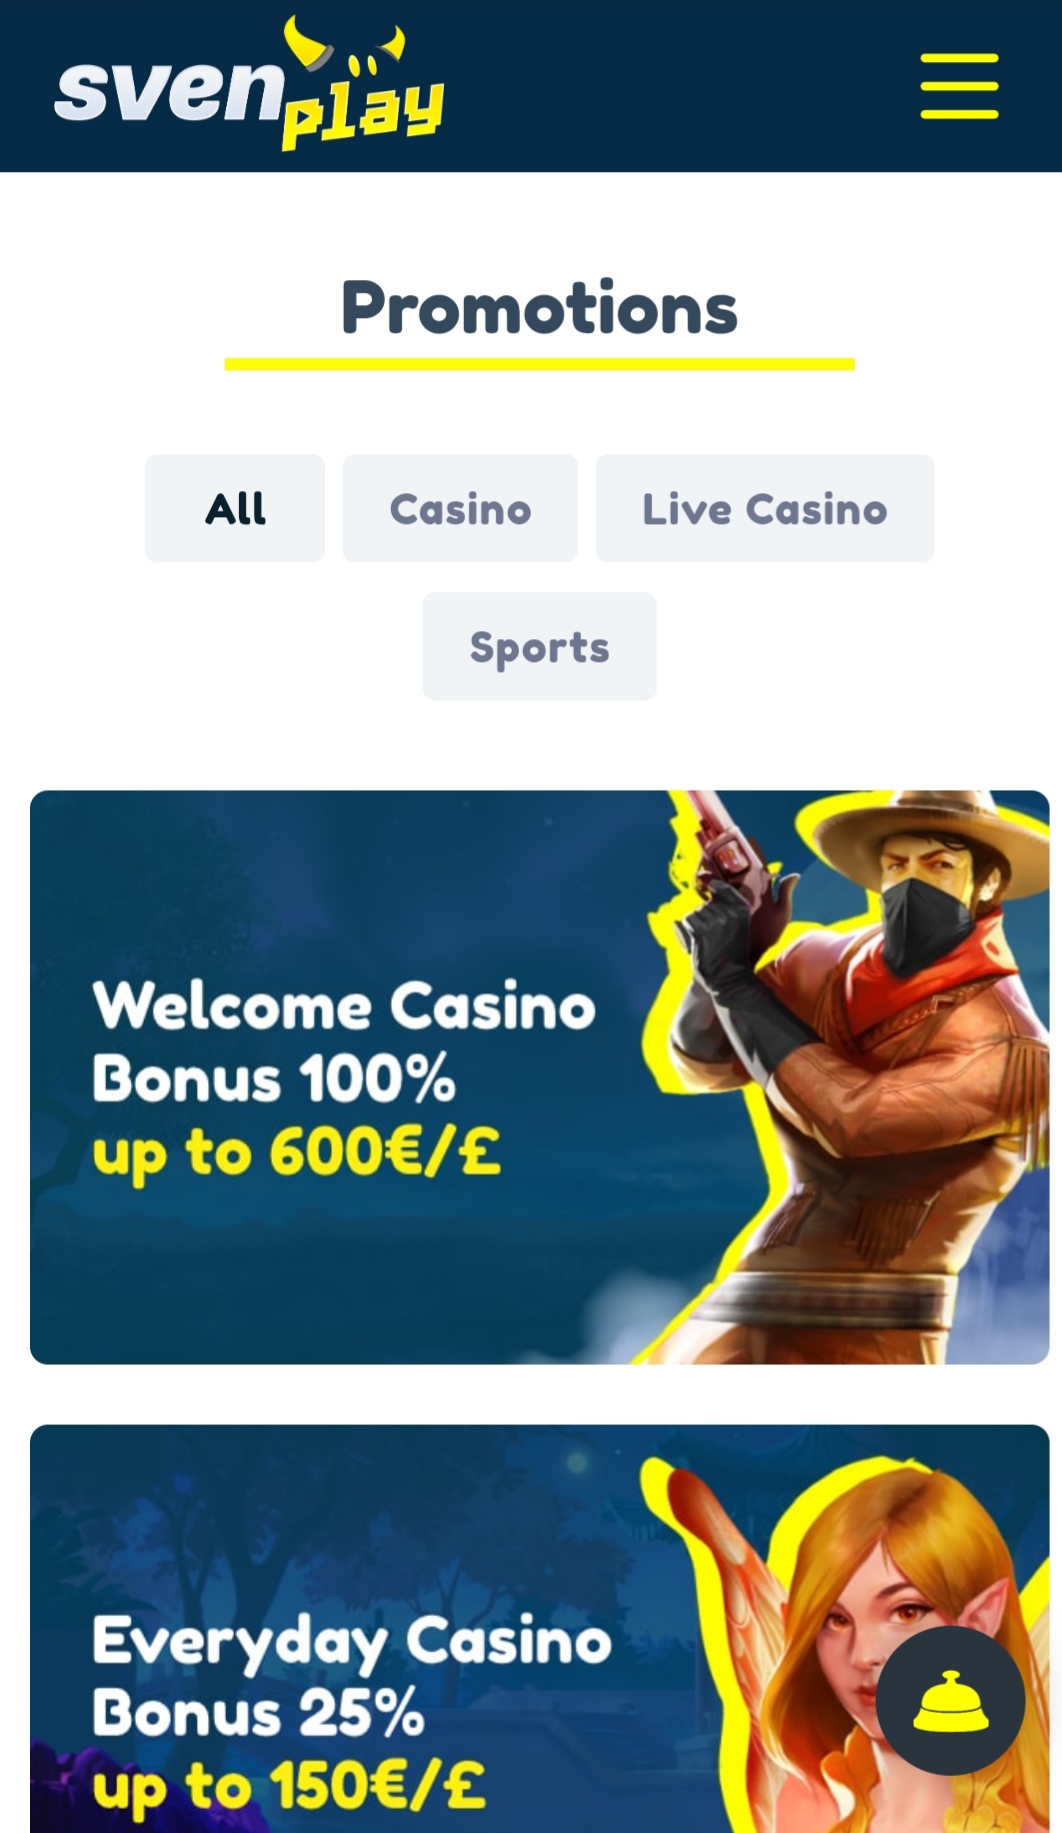 SvenPlay Casino Mobile No Deposit Bonus Review